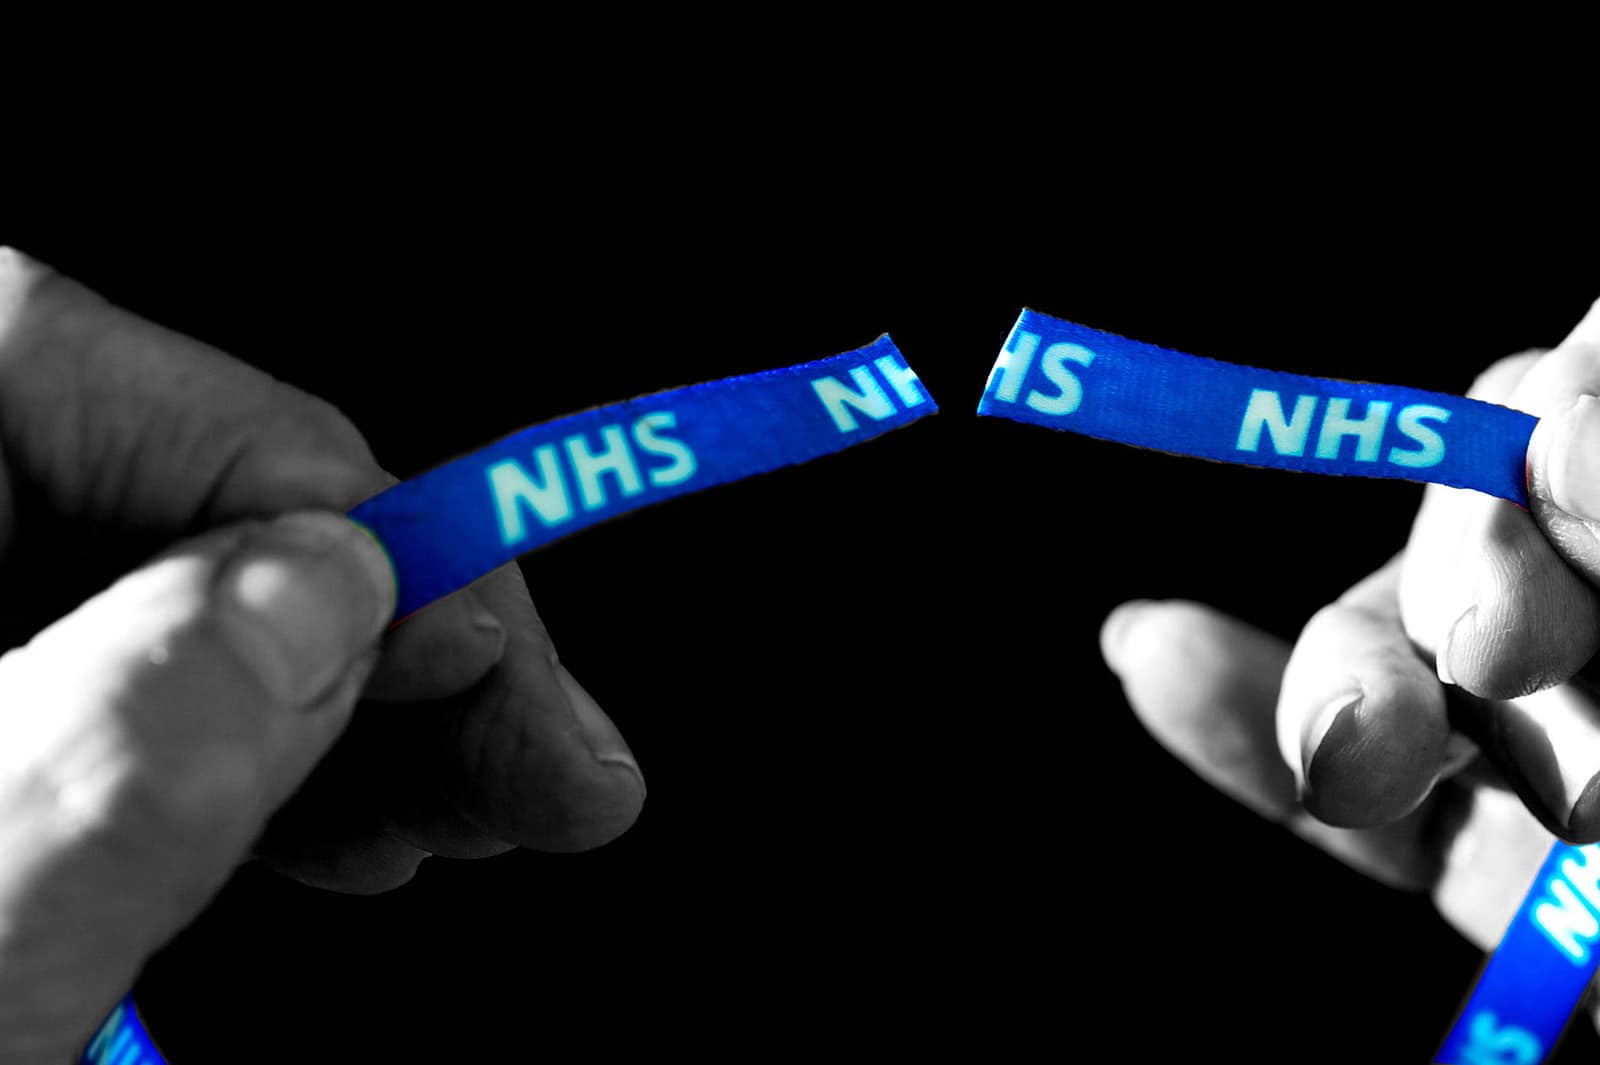 Concern for NHS soars amid unprecedented strike action, poll finds